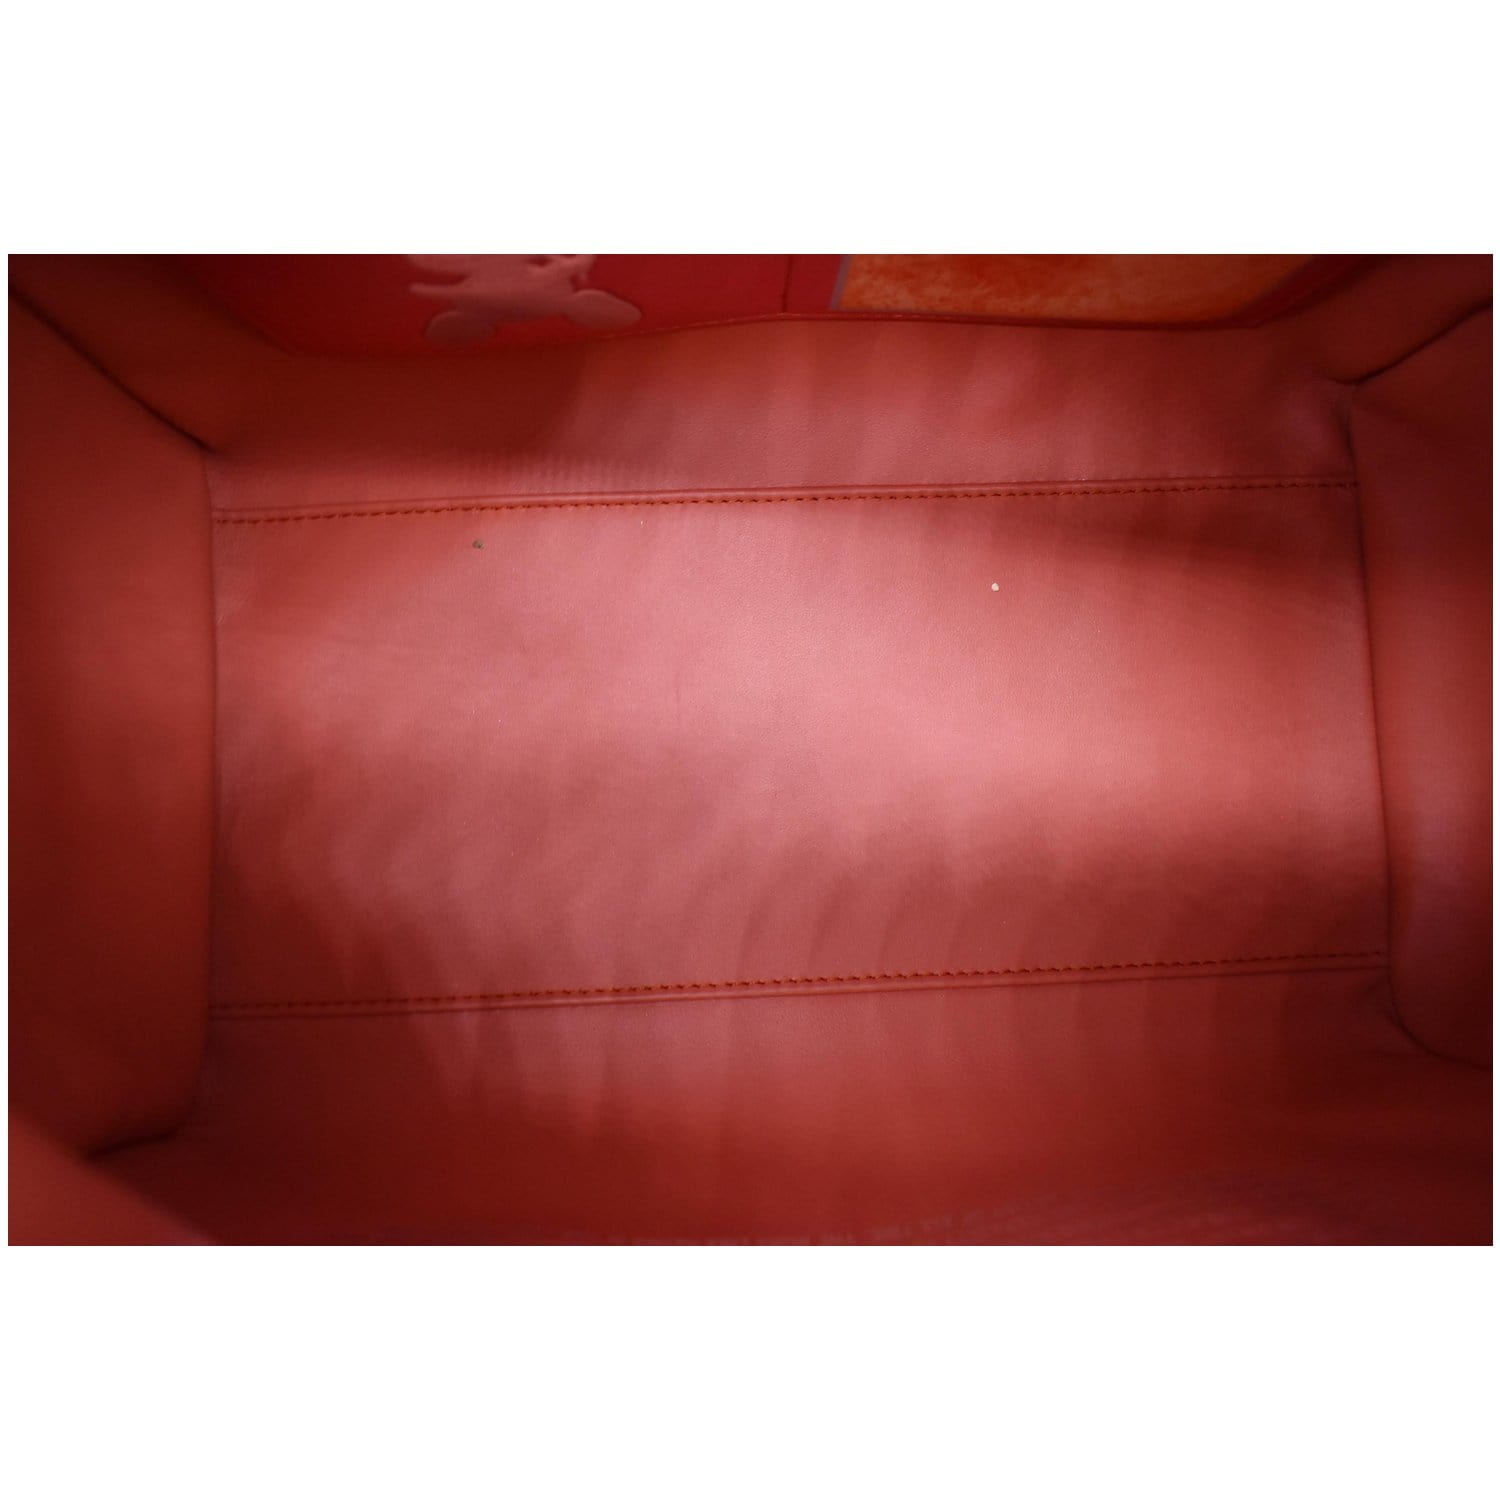 LOUIS VUITTON Jeff Koons DaVinci Speedy 30 Coated Canvas Satchel Bag M